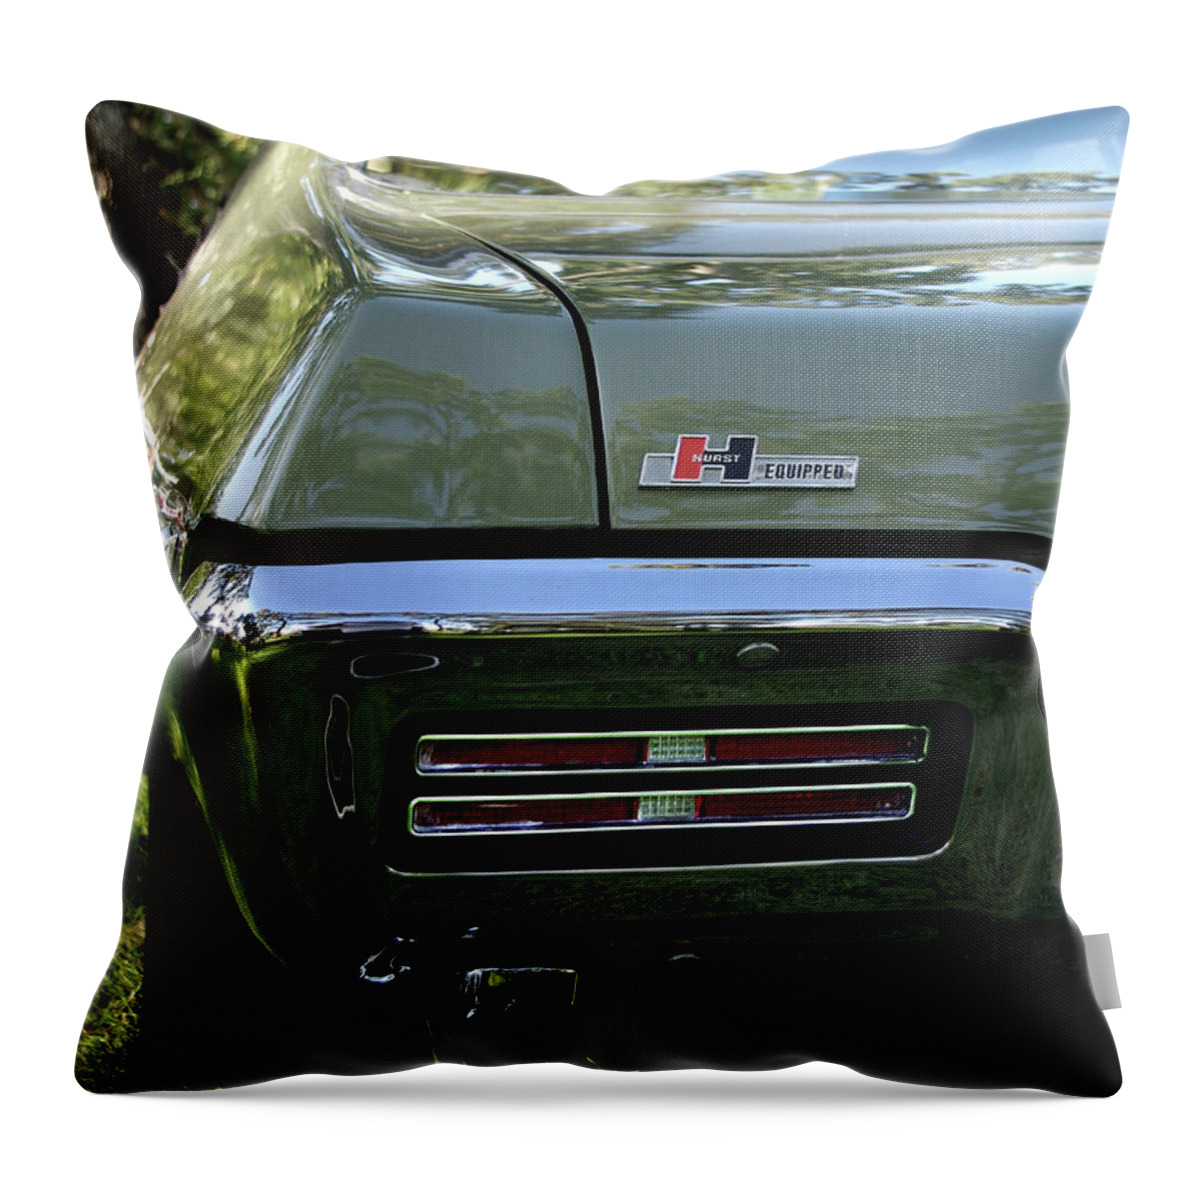 1968 Pontiac Gto Throw Pillow featuring the photograph 1968 Pontiac GTO by Peter Piatt